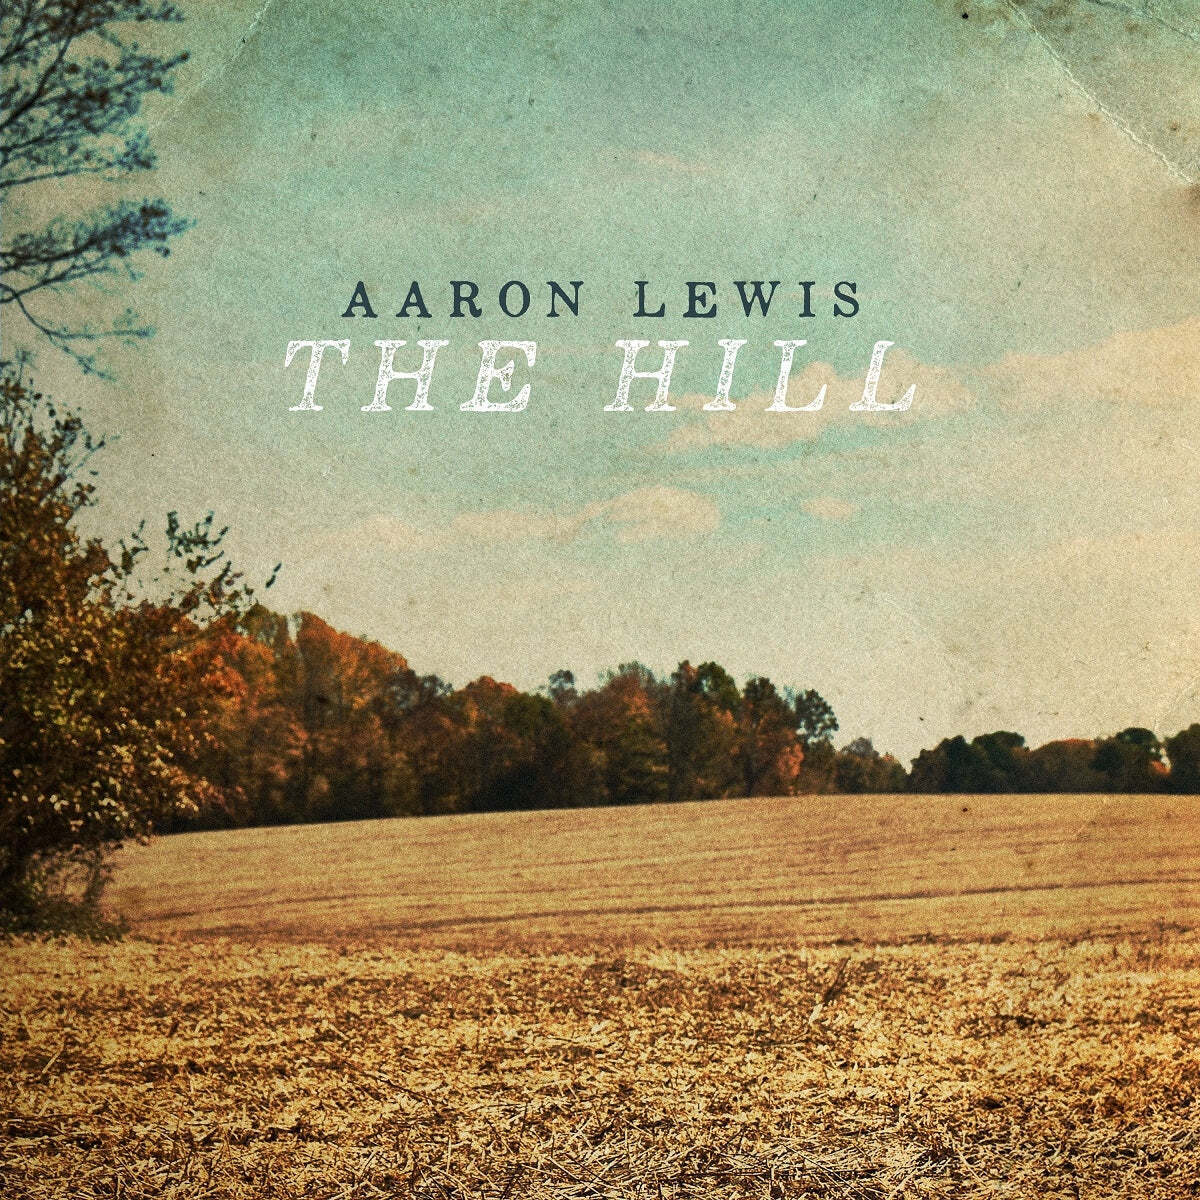 Aaron Lewis - The Hill [Coke Bottle Green Vinyl] NEW Vinyl